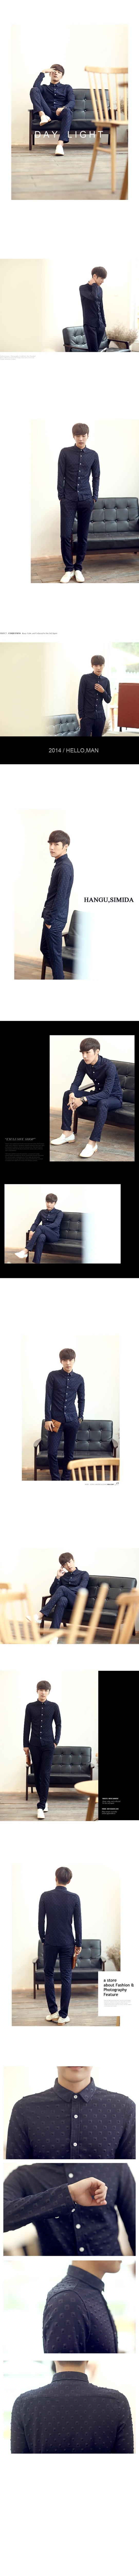 mssefn韩国最新面料3D立体压花 男士韩版时尚修身长袖衬衫套装TZ01-P145